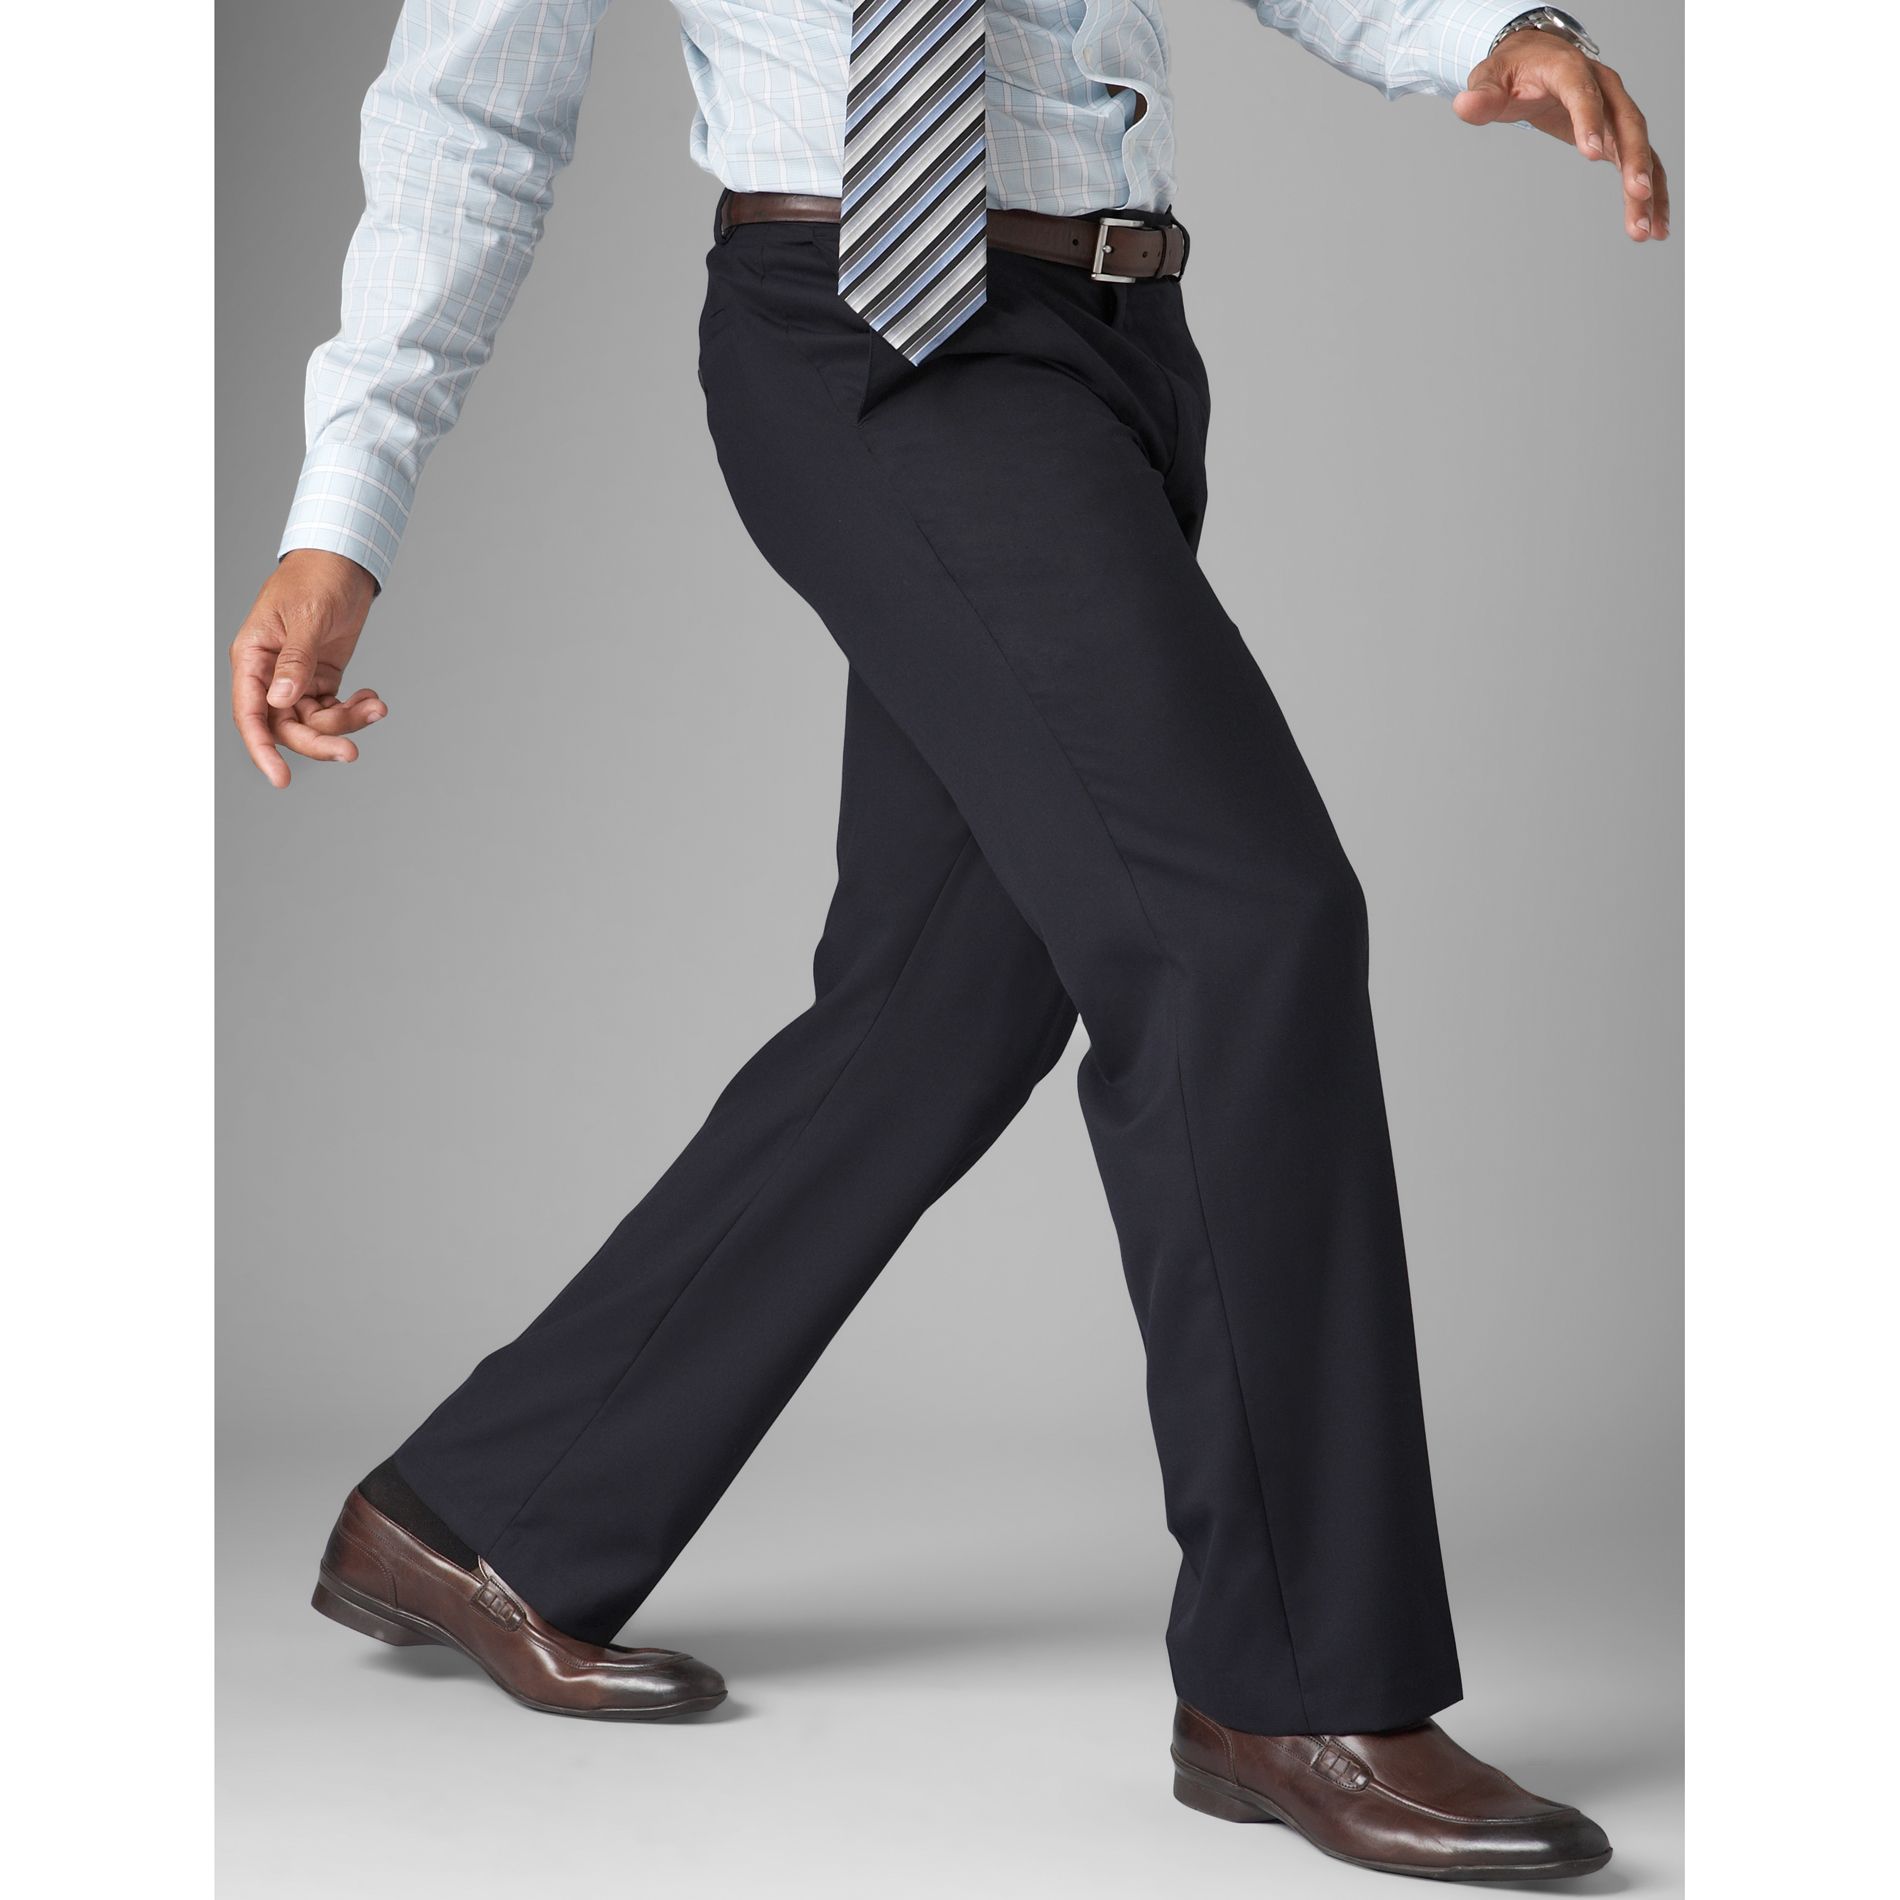 Dockers Men's Classic Fit Colin Dress Pants